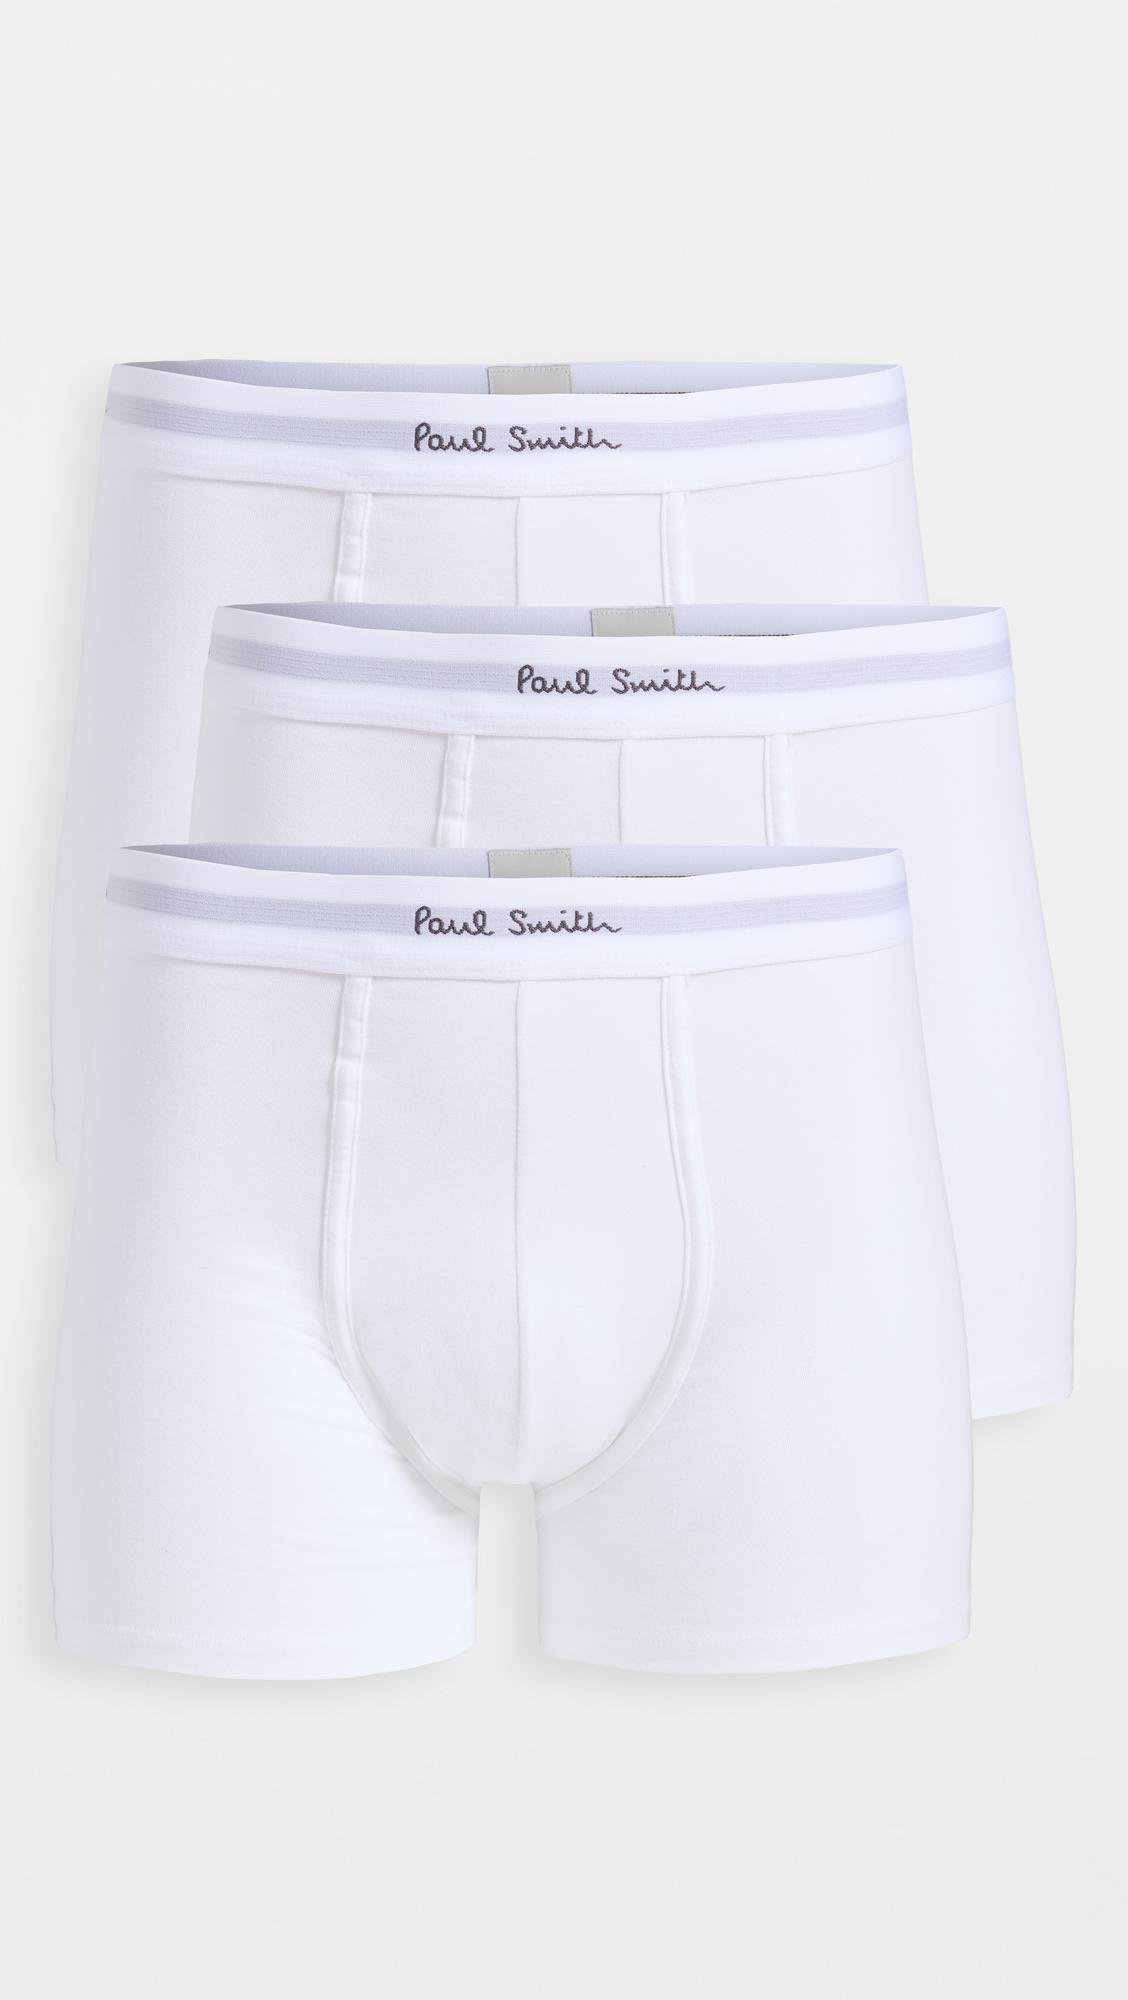 Paul Smith Underwear Pack in White for Men | Lyst